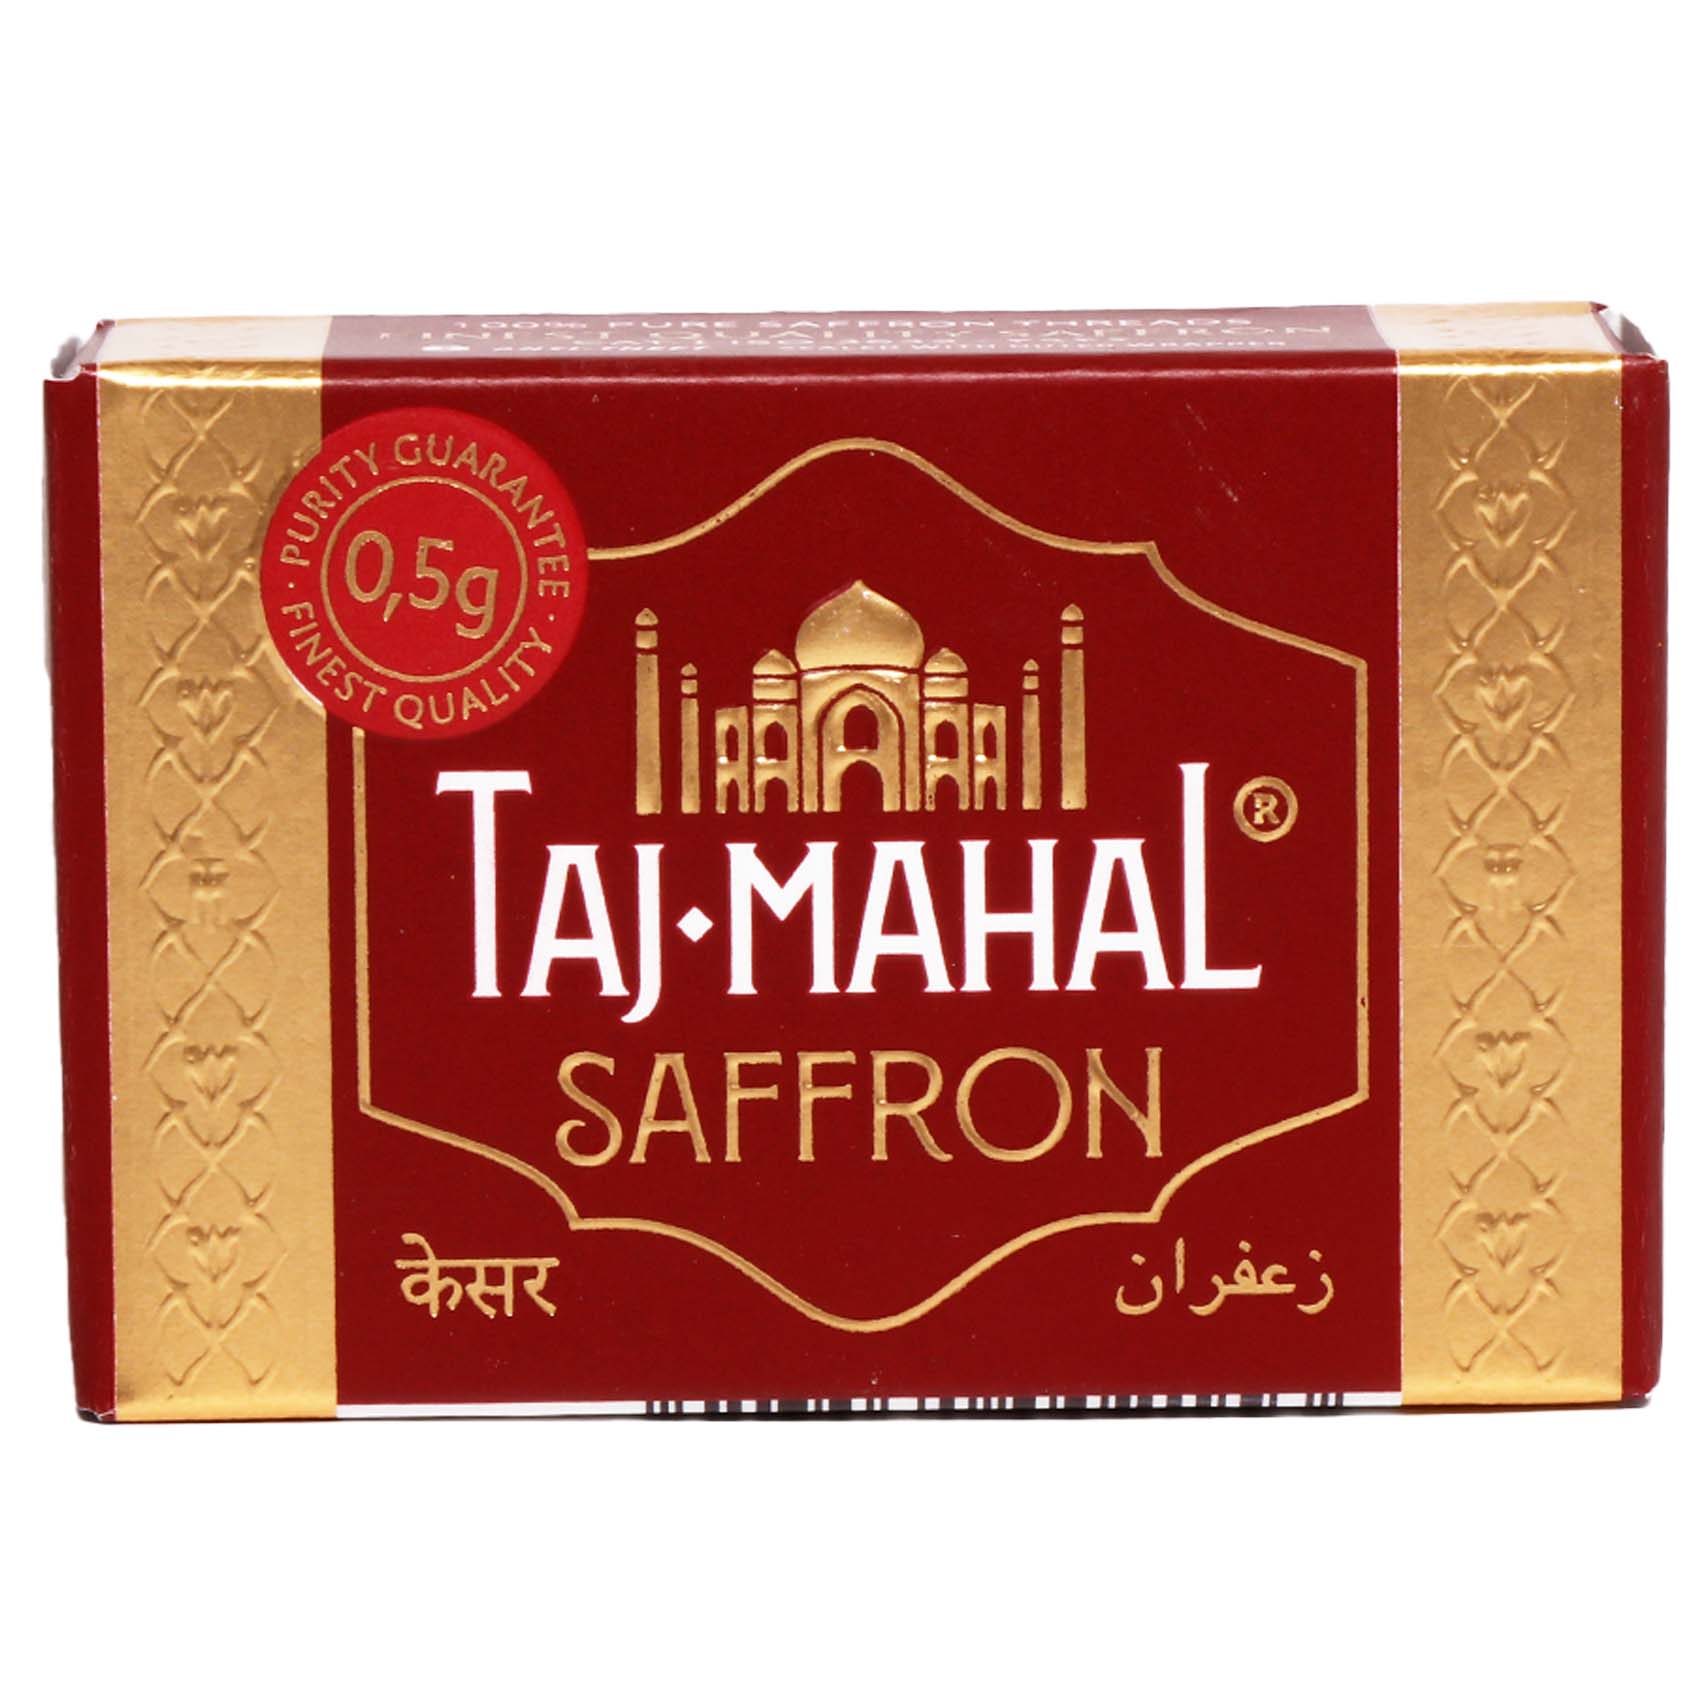 Taj Mahal Saffron 0.5g (Spain)